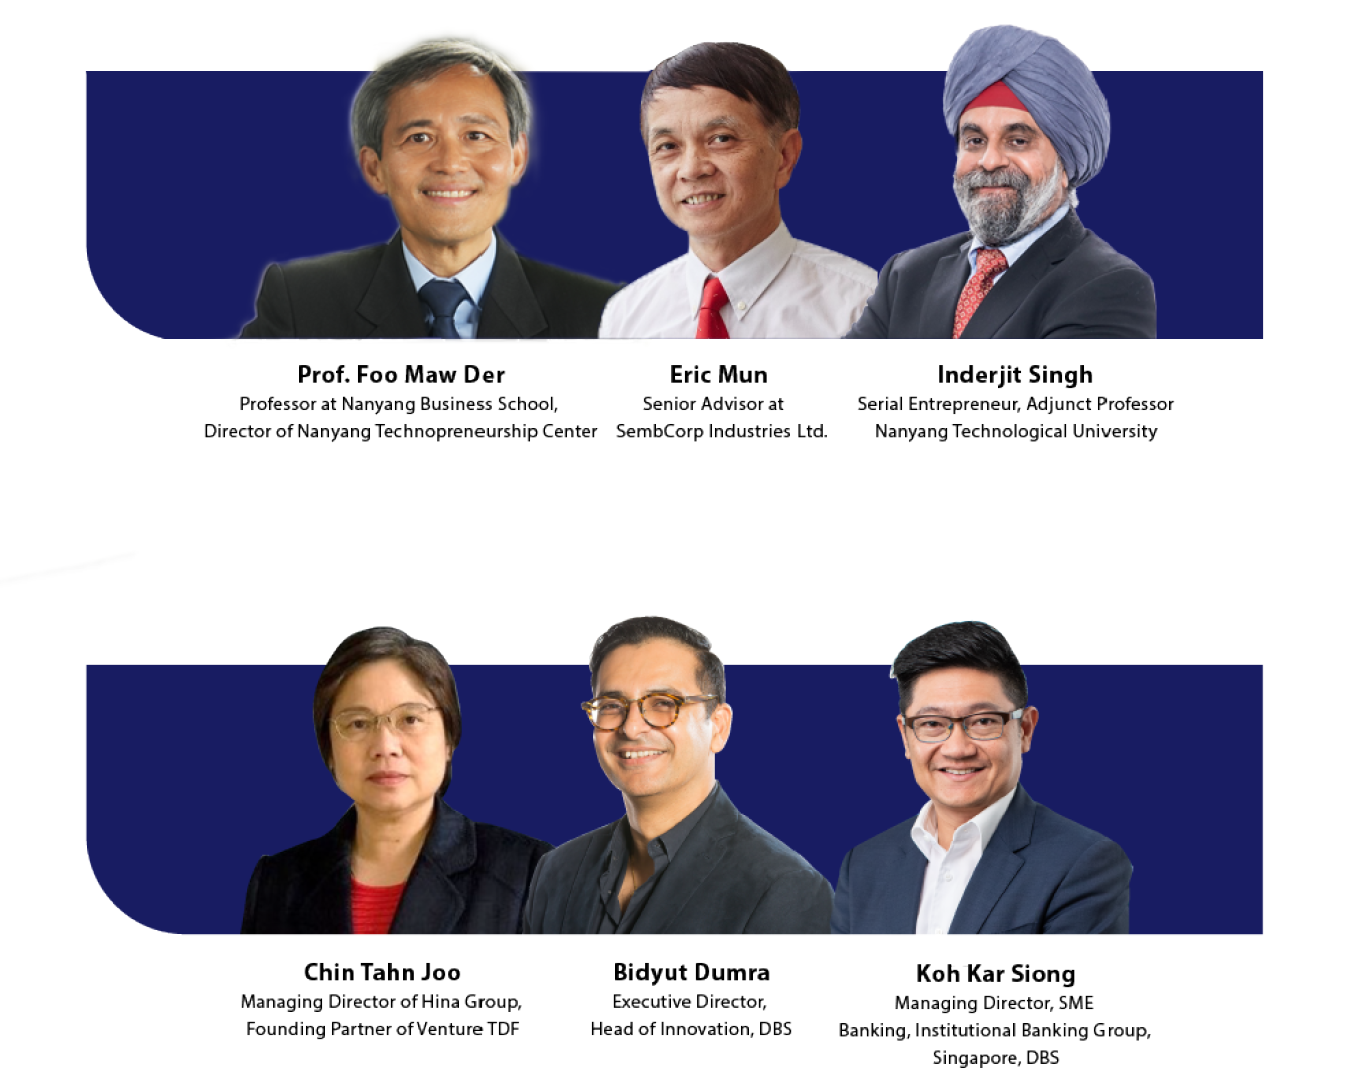 Enterprise Leadership For Transformation 2021 programme selected instructors prof lam kwok yan, inderjit singh, Eric Mun, Mark Greeven, Chin Tahn Joo, Didyut Dumra, Koh Kar Siong